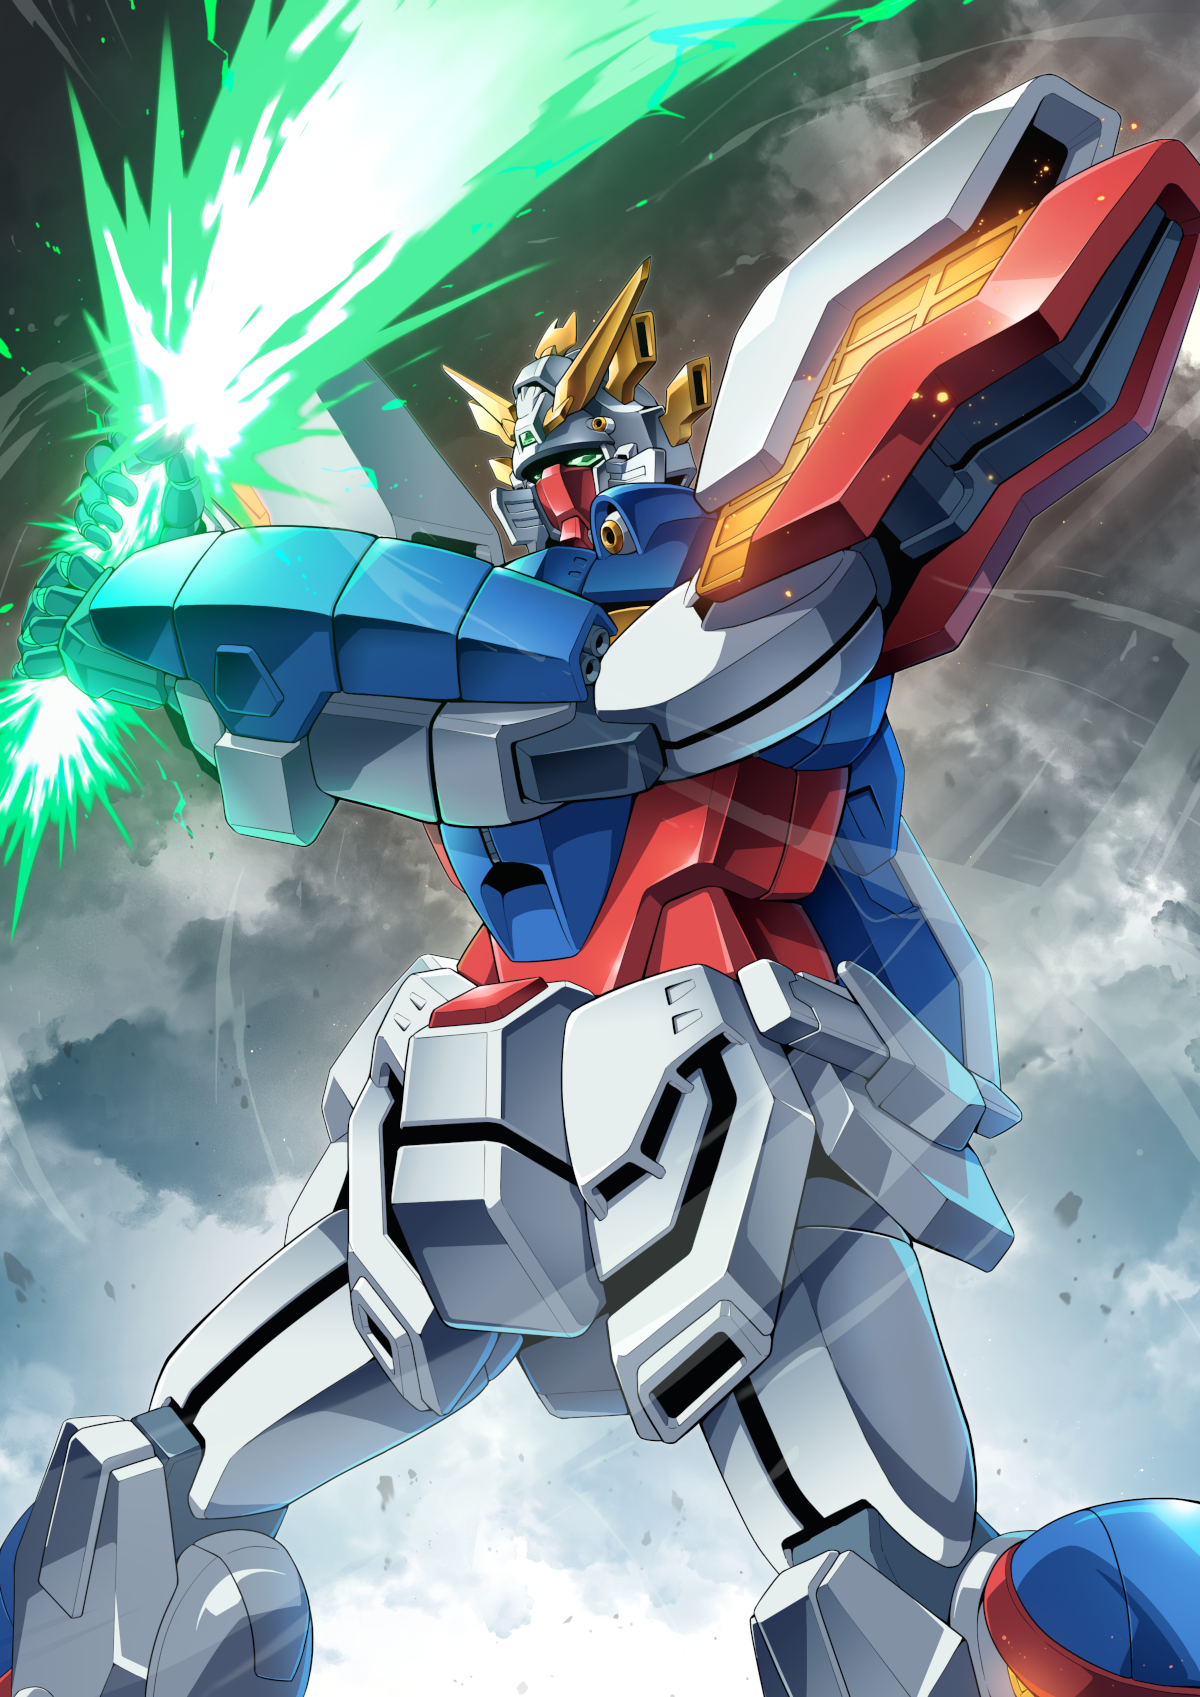 Anime 1200x1697 Shining Gundam Mobile Fighter G Gundam anime mechs Gundam artwork digital art fan art Super Robot Taisen